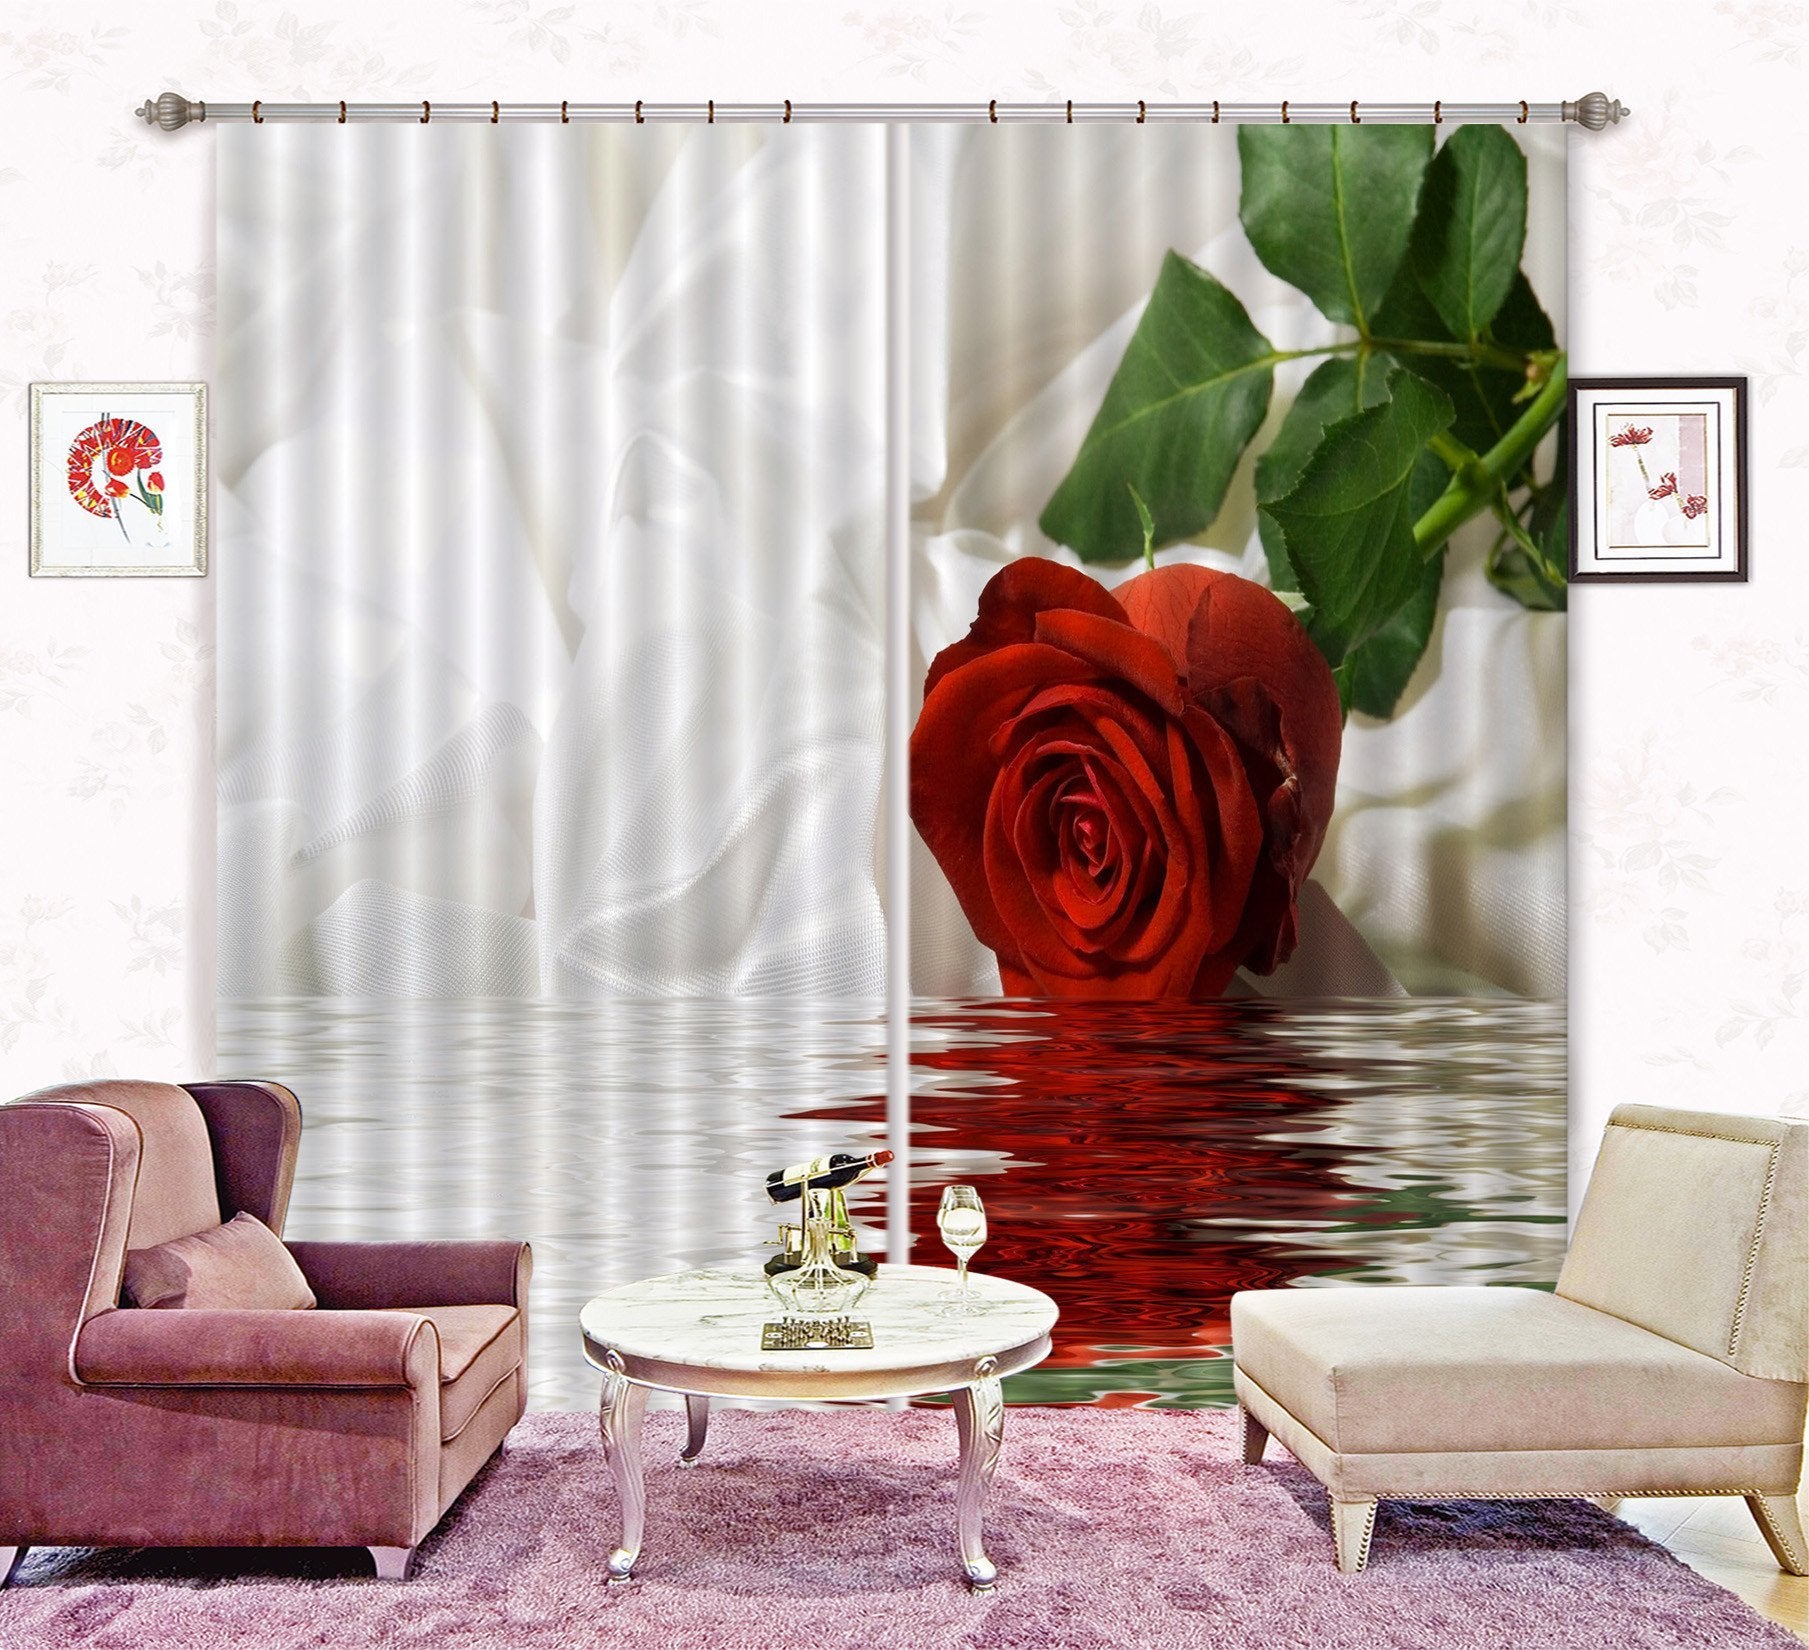 3D Red Rose And Silk 247 Curtains Drapes Wallpaper AJ Wallpaper 